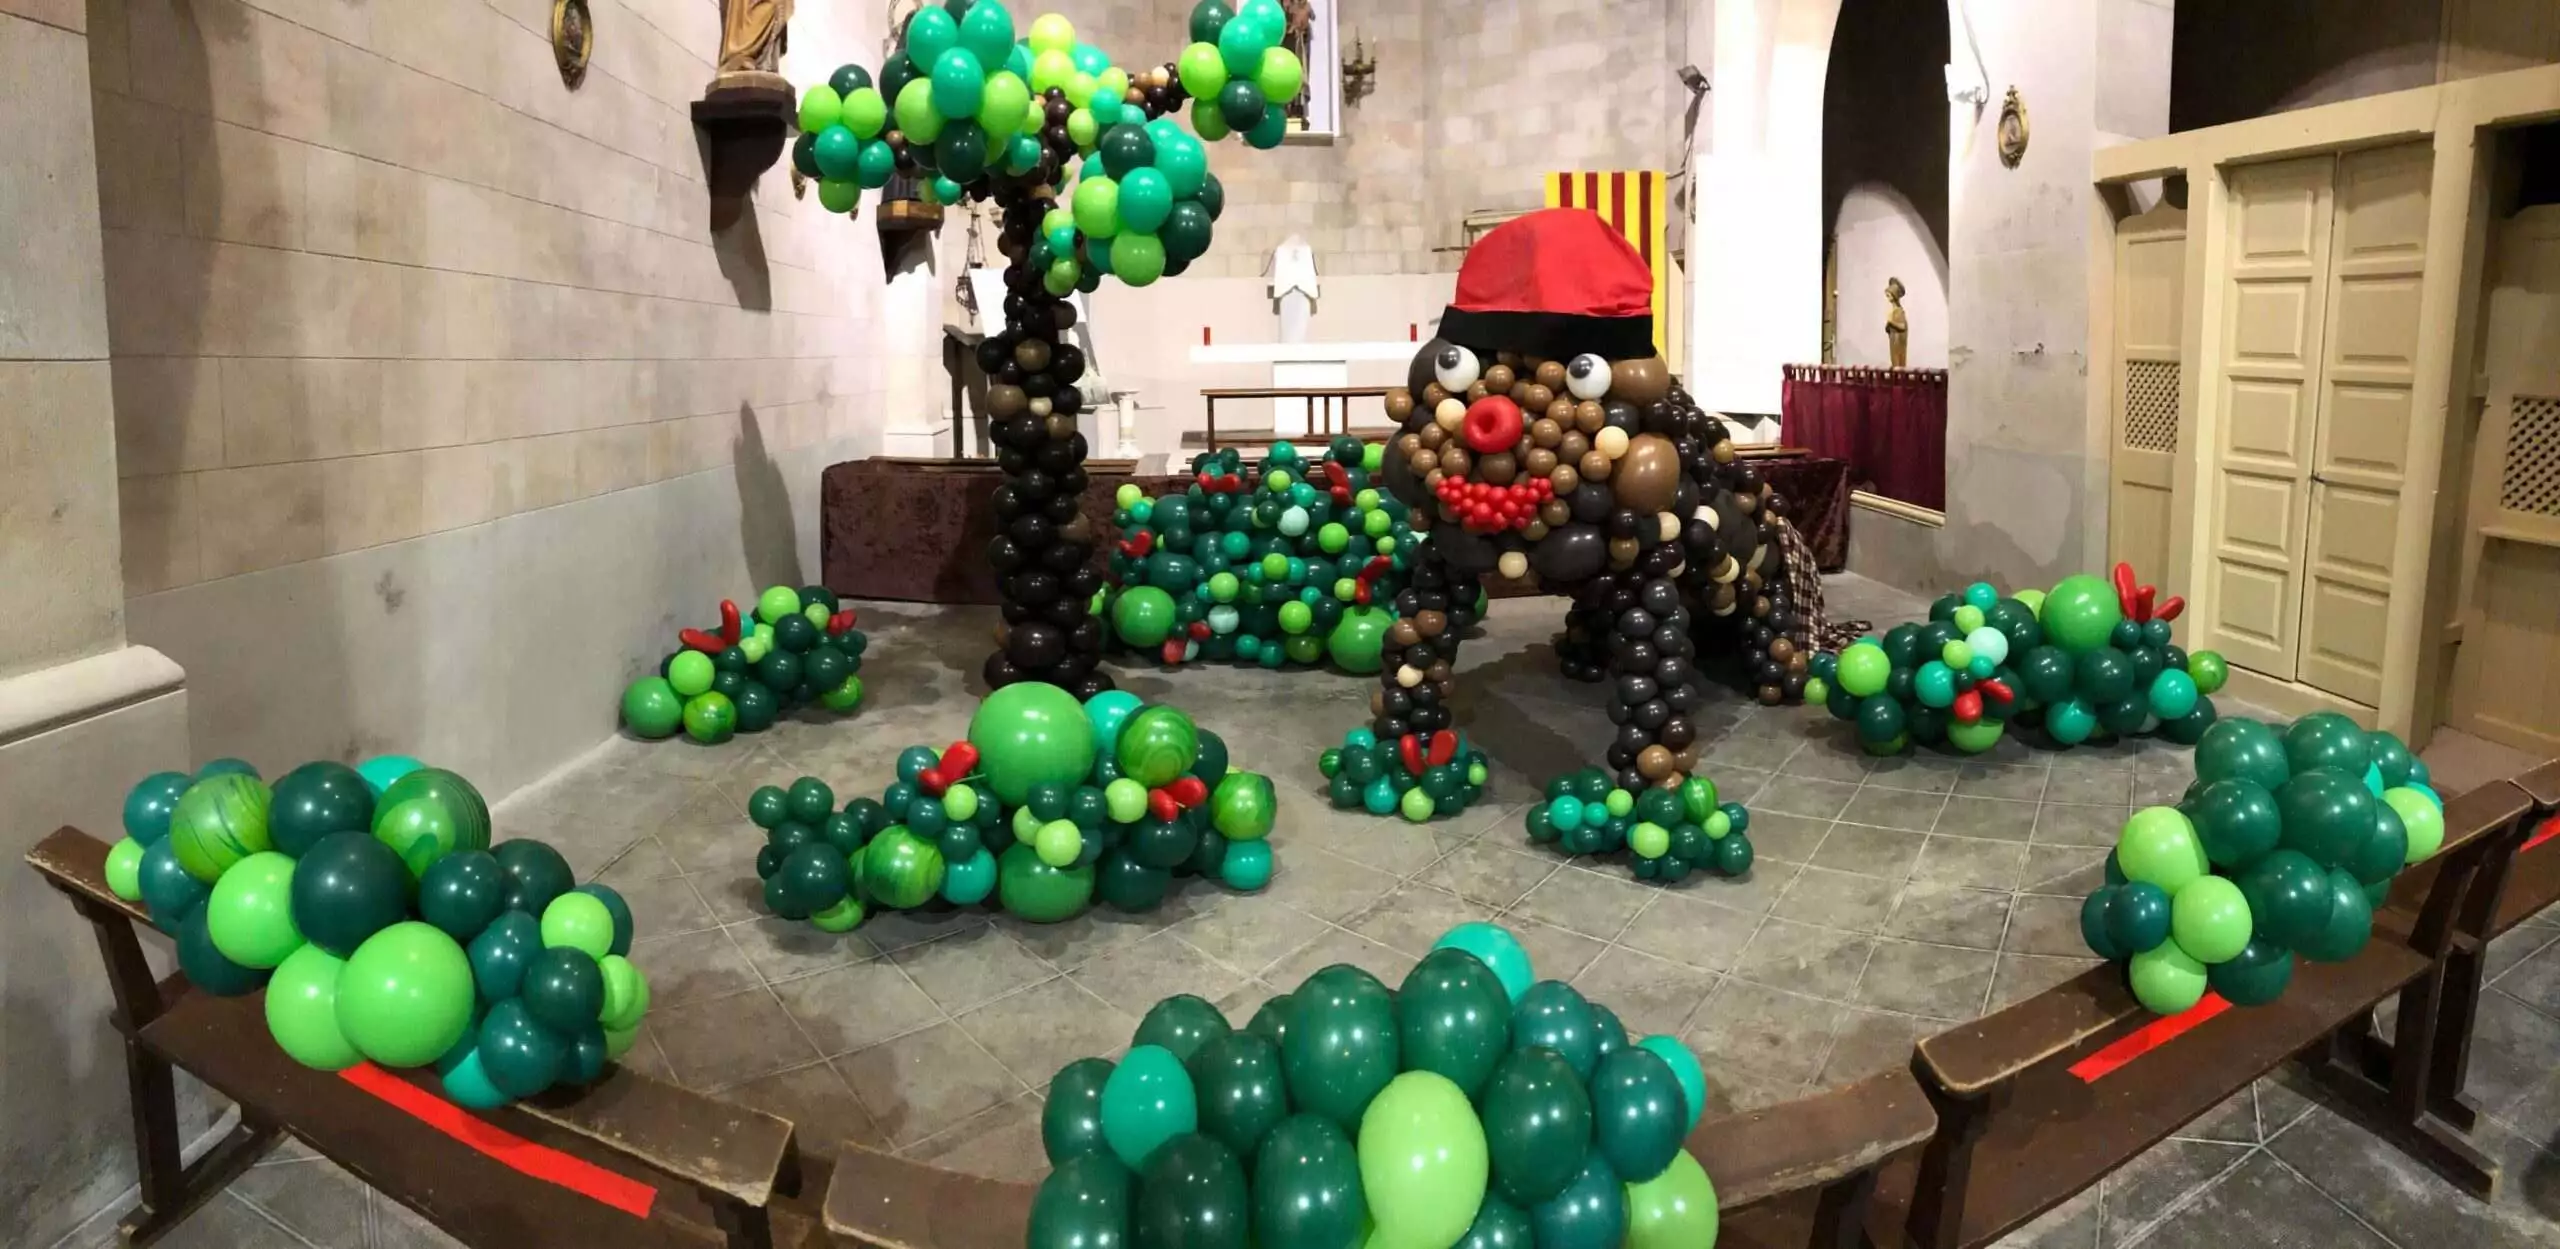 Bosque i Tió hecho con globos